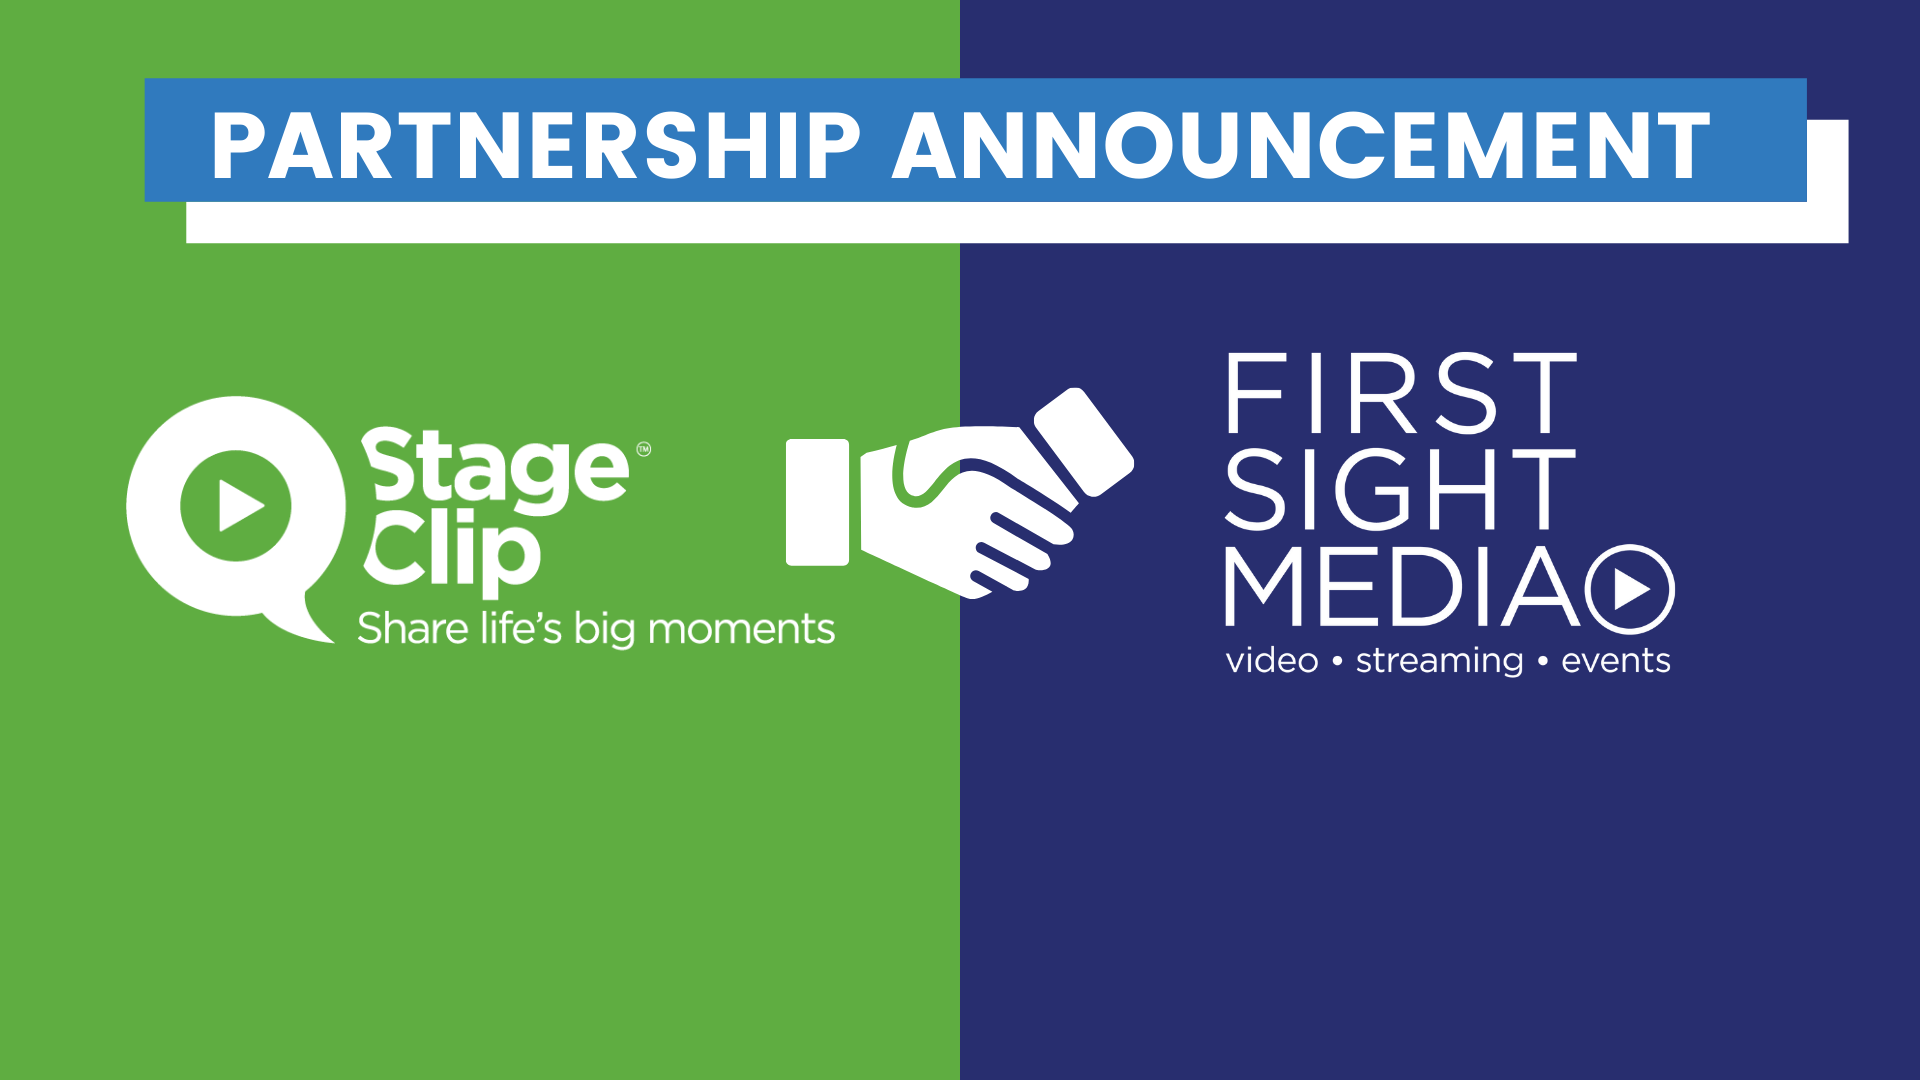 First Sight Media StageClip Partnership